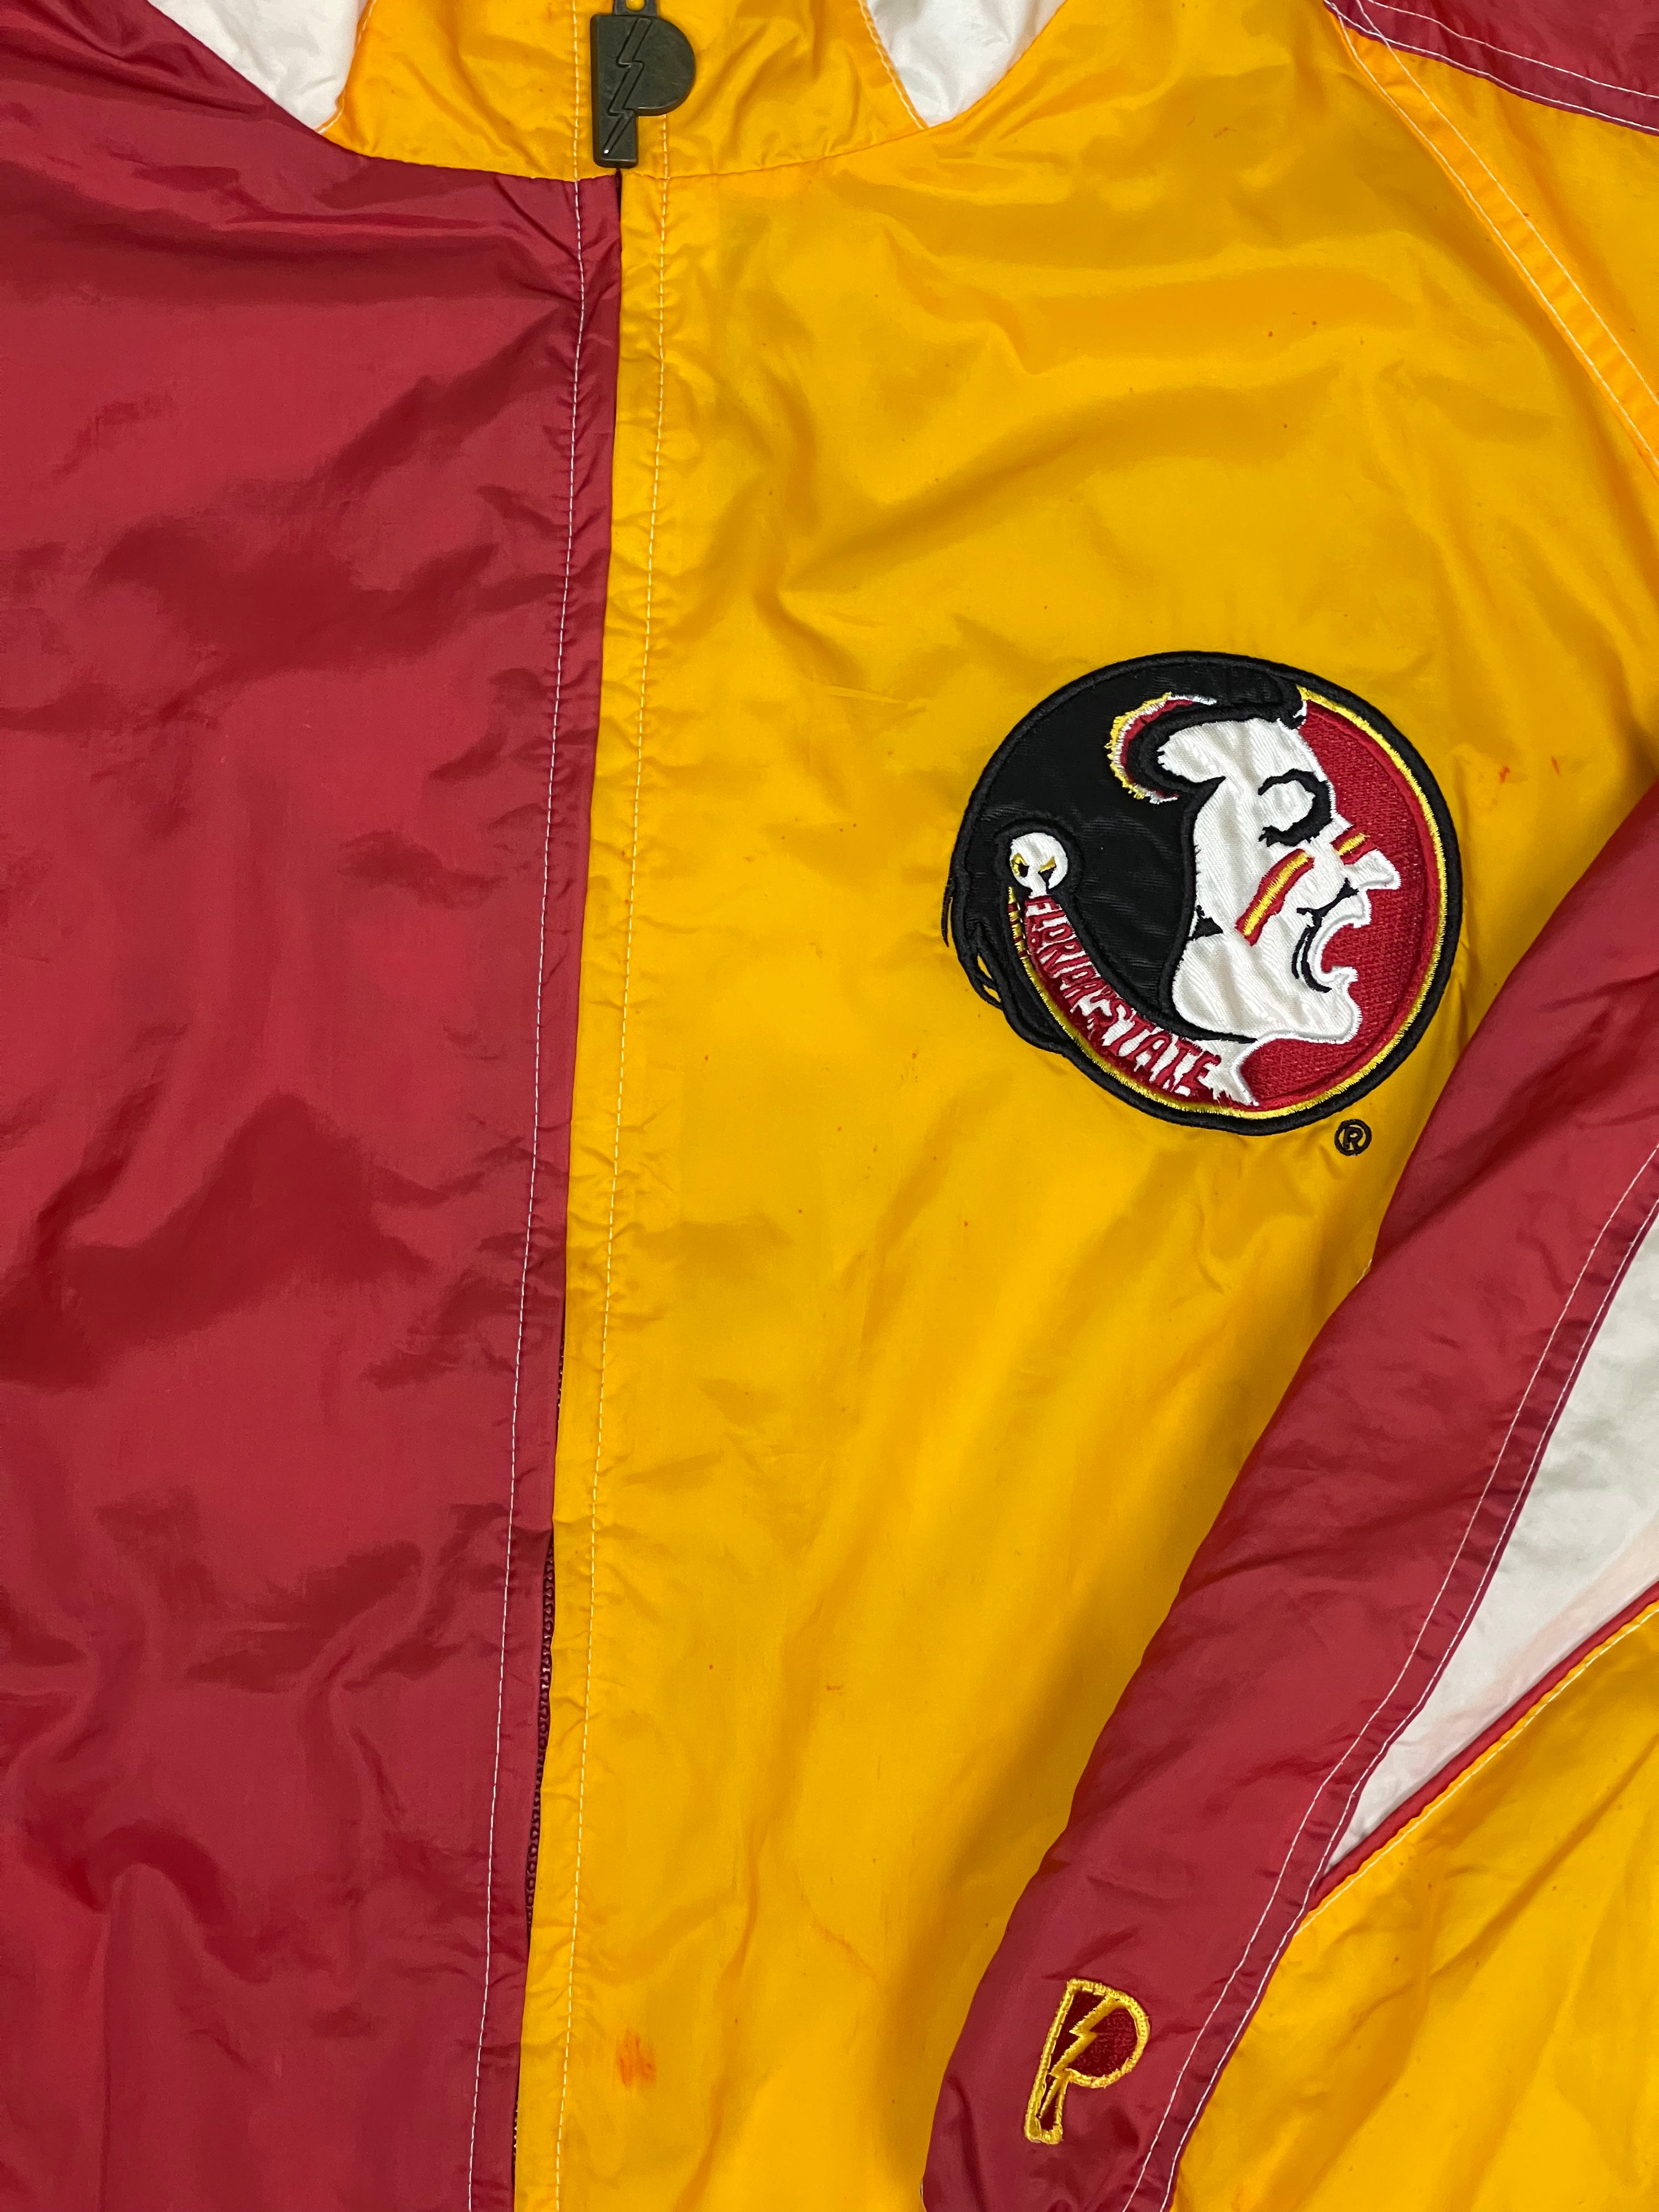 Florida State Pro Player Vintage Jacket